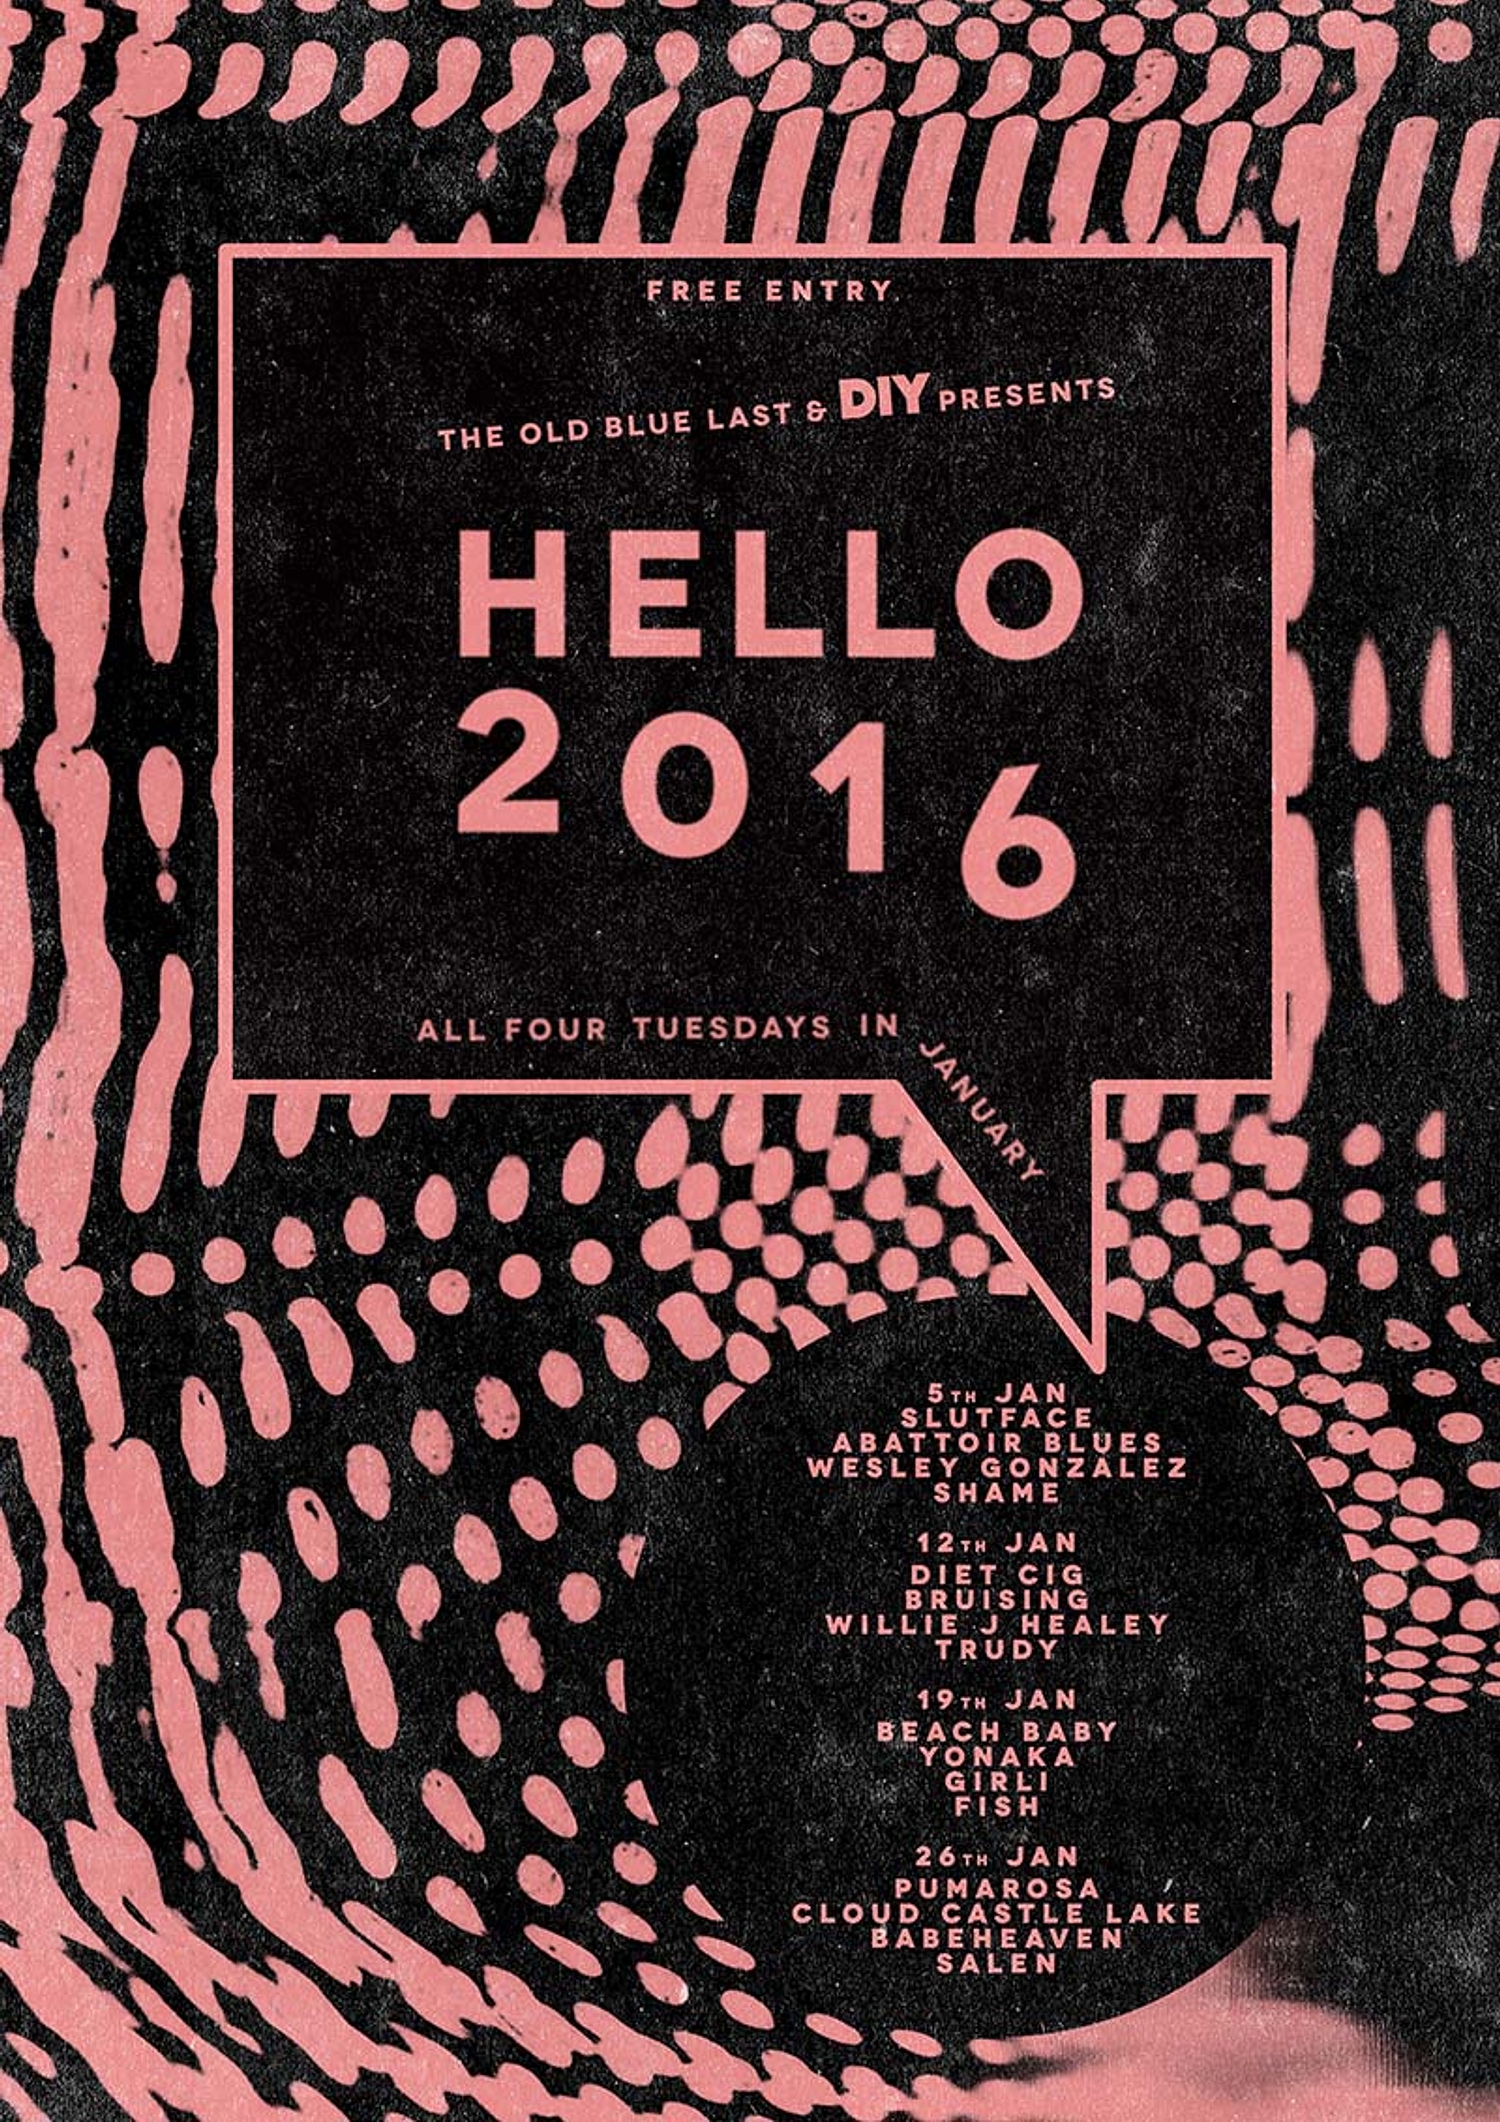 Wesley Gonzalez, Shame, Fish added to Hello 2016